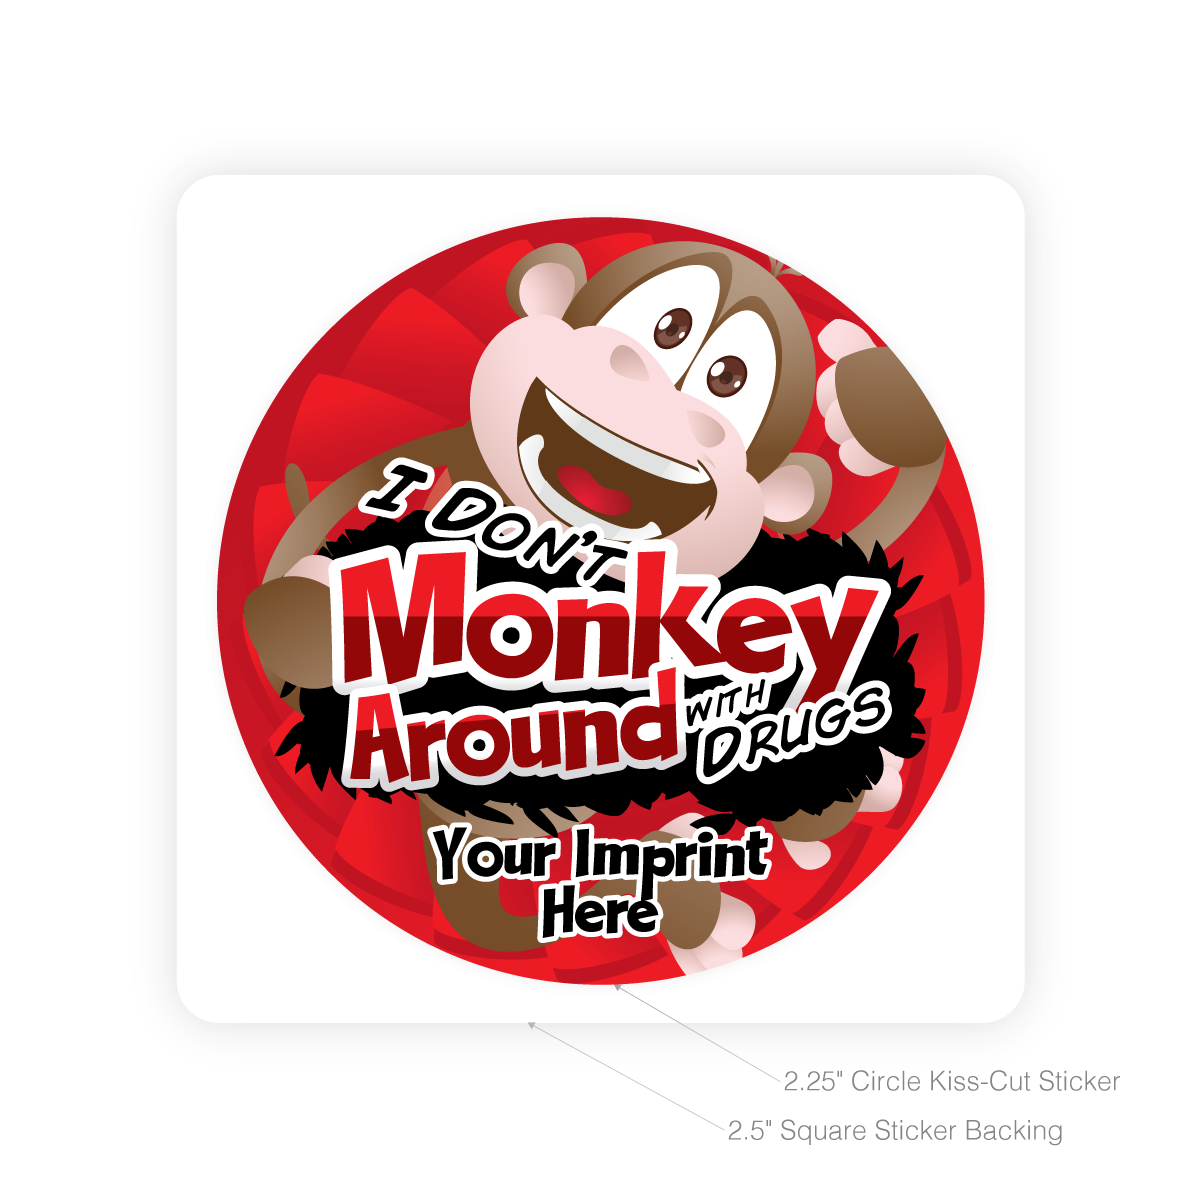 Custom Round Sticker - I Don't Monkey Around with Drugs